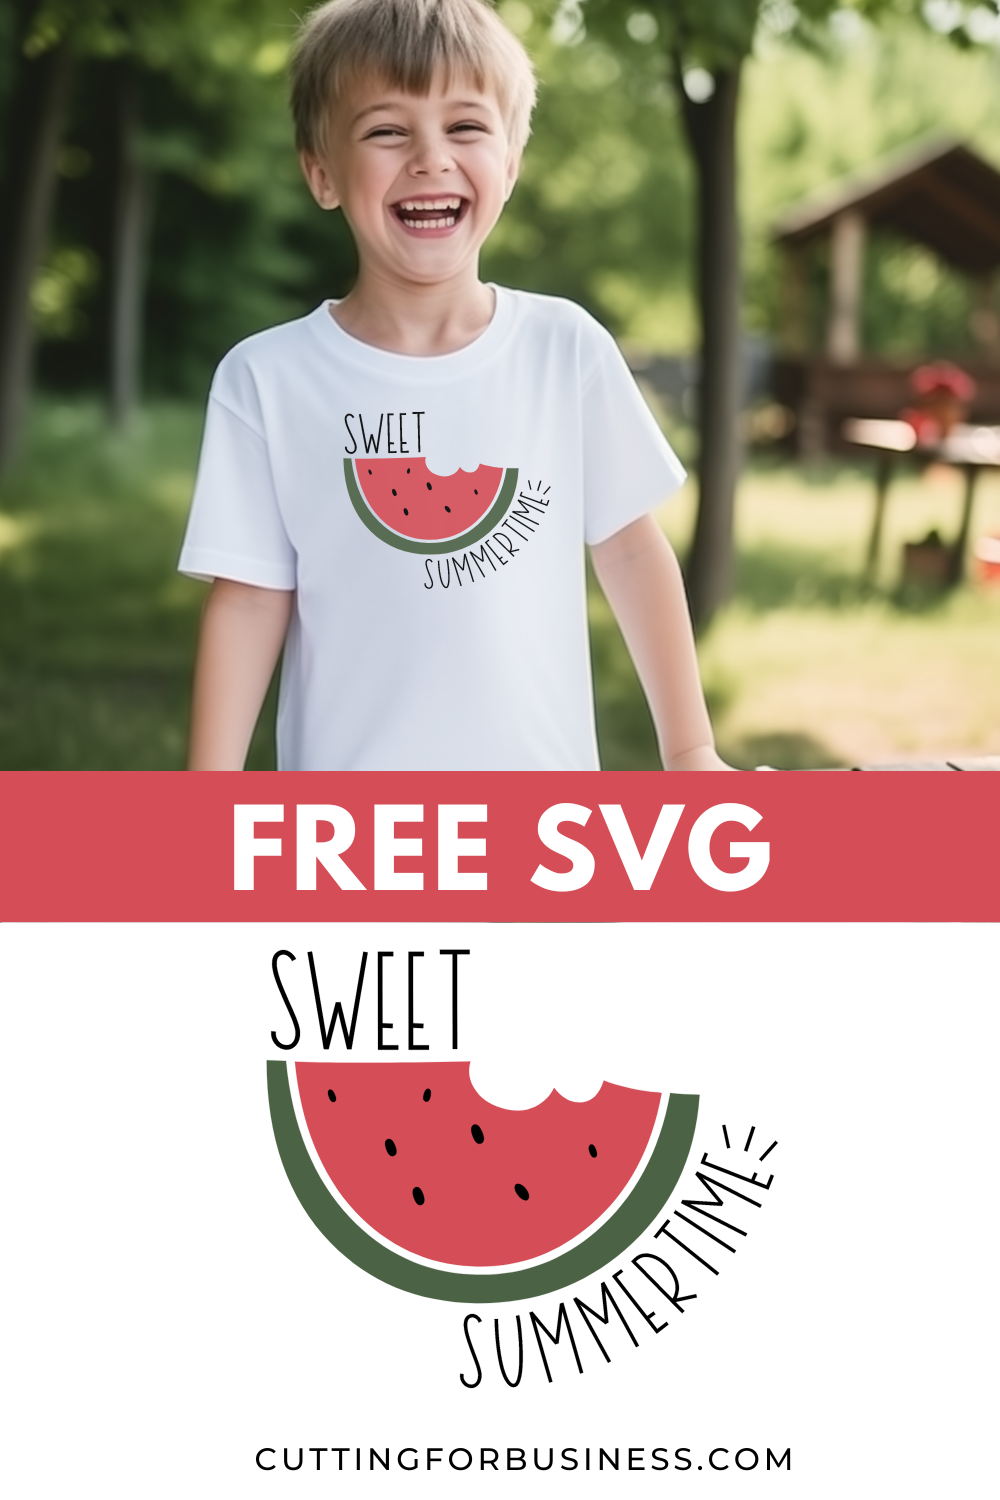 Free SVG - Sweet Summertime - cuttingforbusiness.com